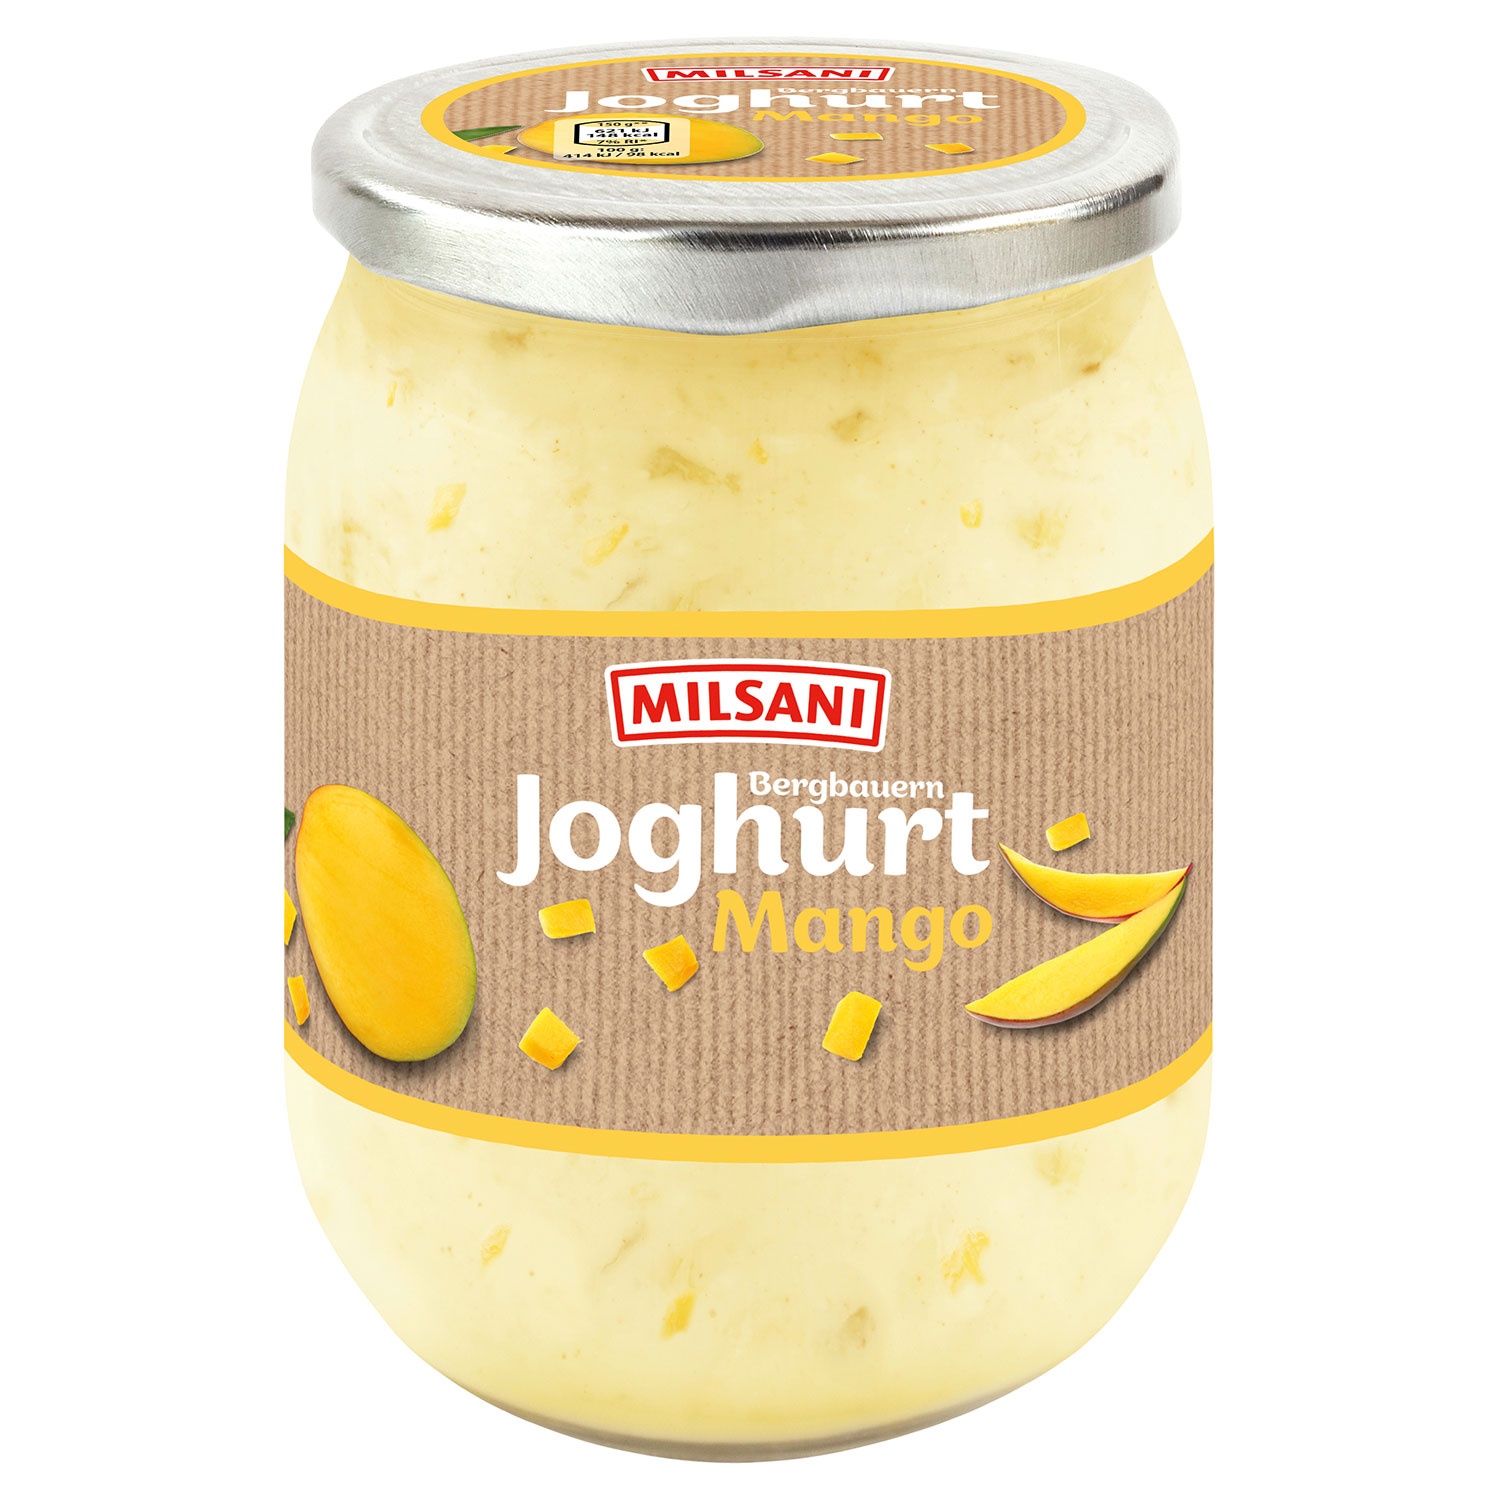 MILSANI Bergbauern-Joghurt 0,45 kg, Mango